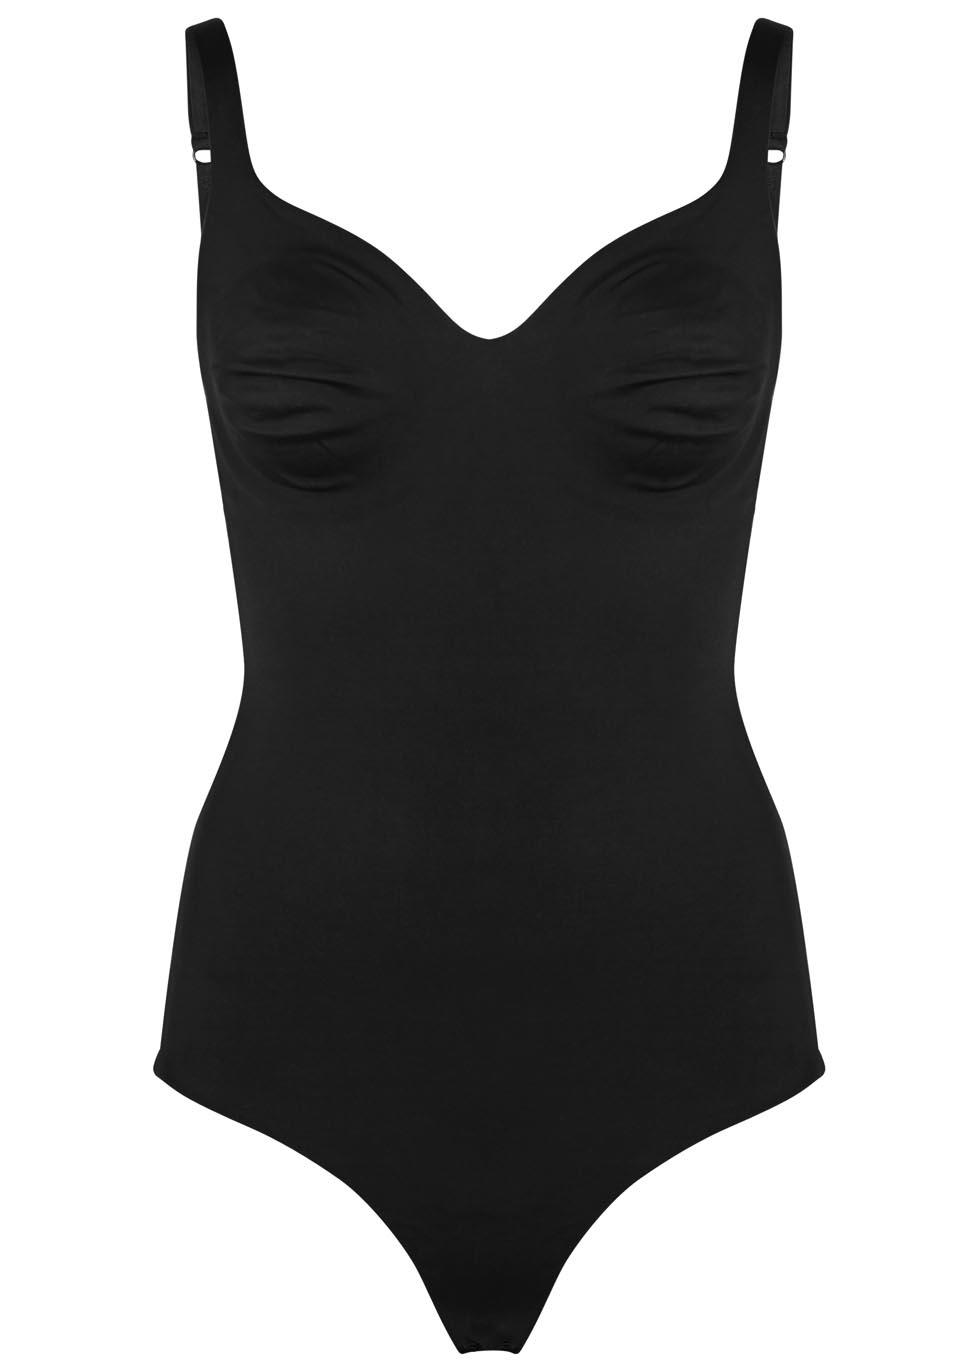 Wolford Mat De Luxe black forming bodysuit - unique designing